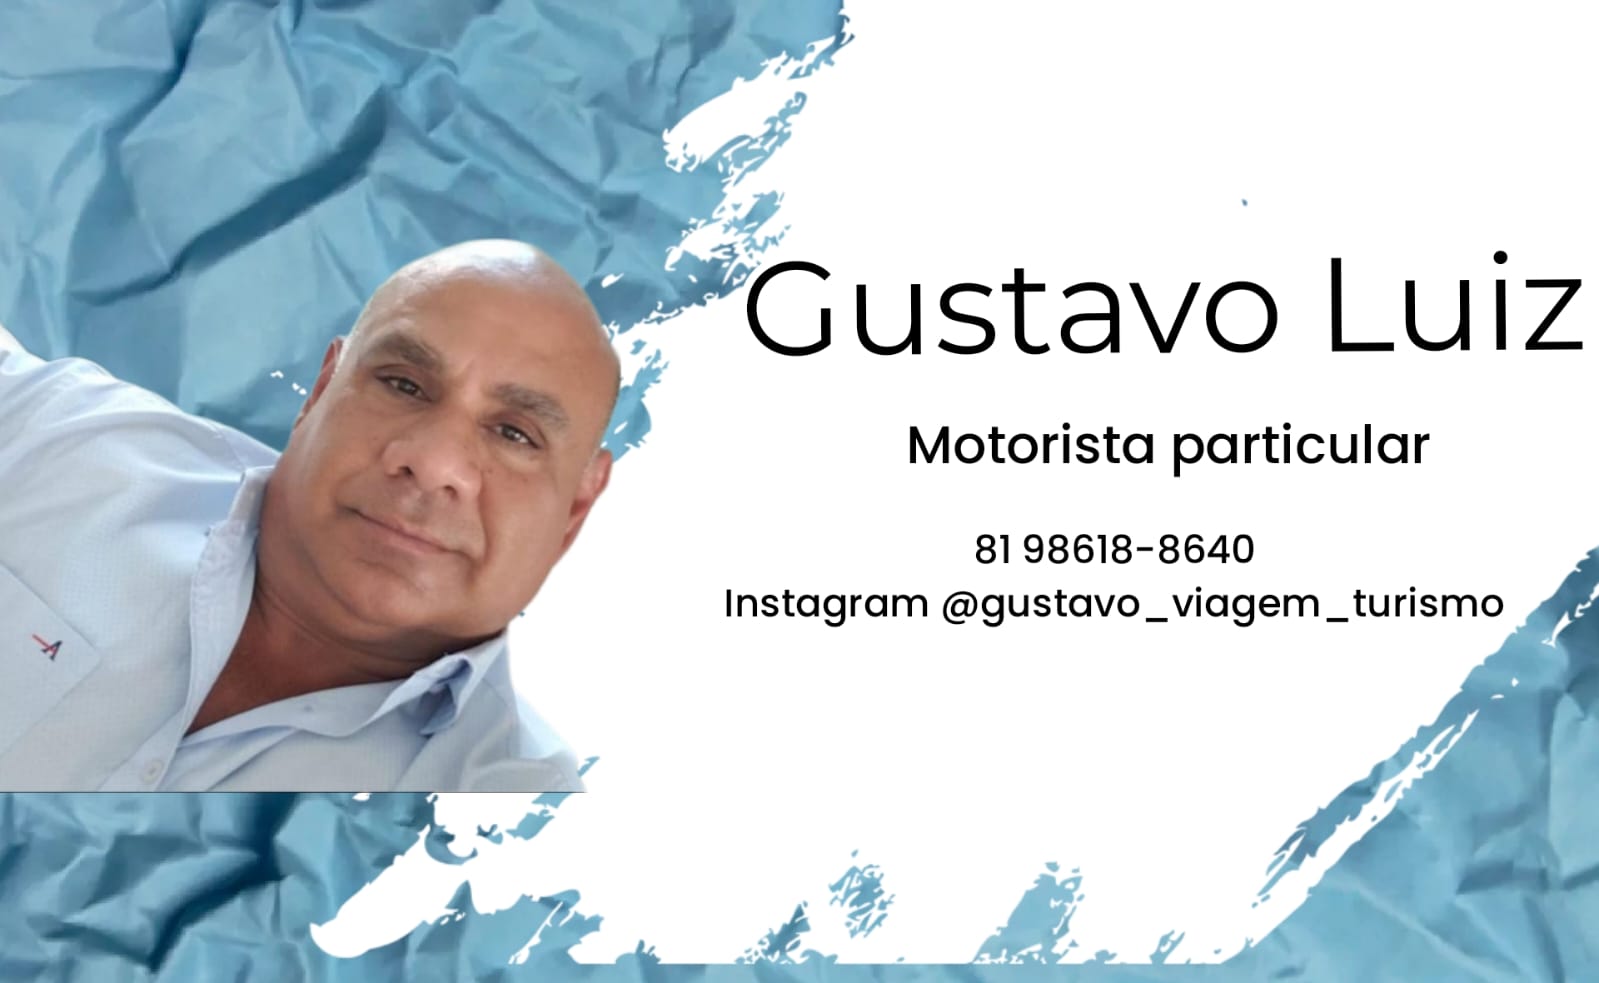 Motorista particular

8198618-8640
Instagram @gustavo _viagem _turismo